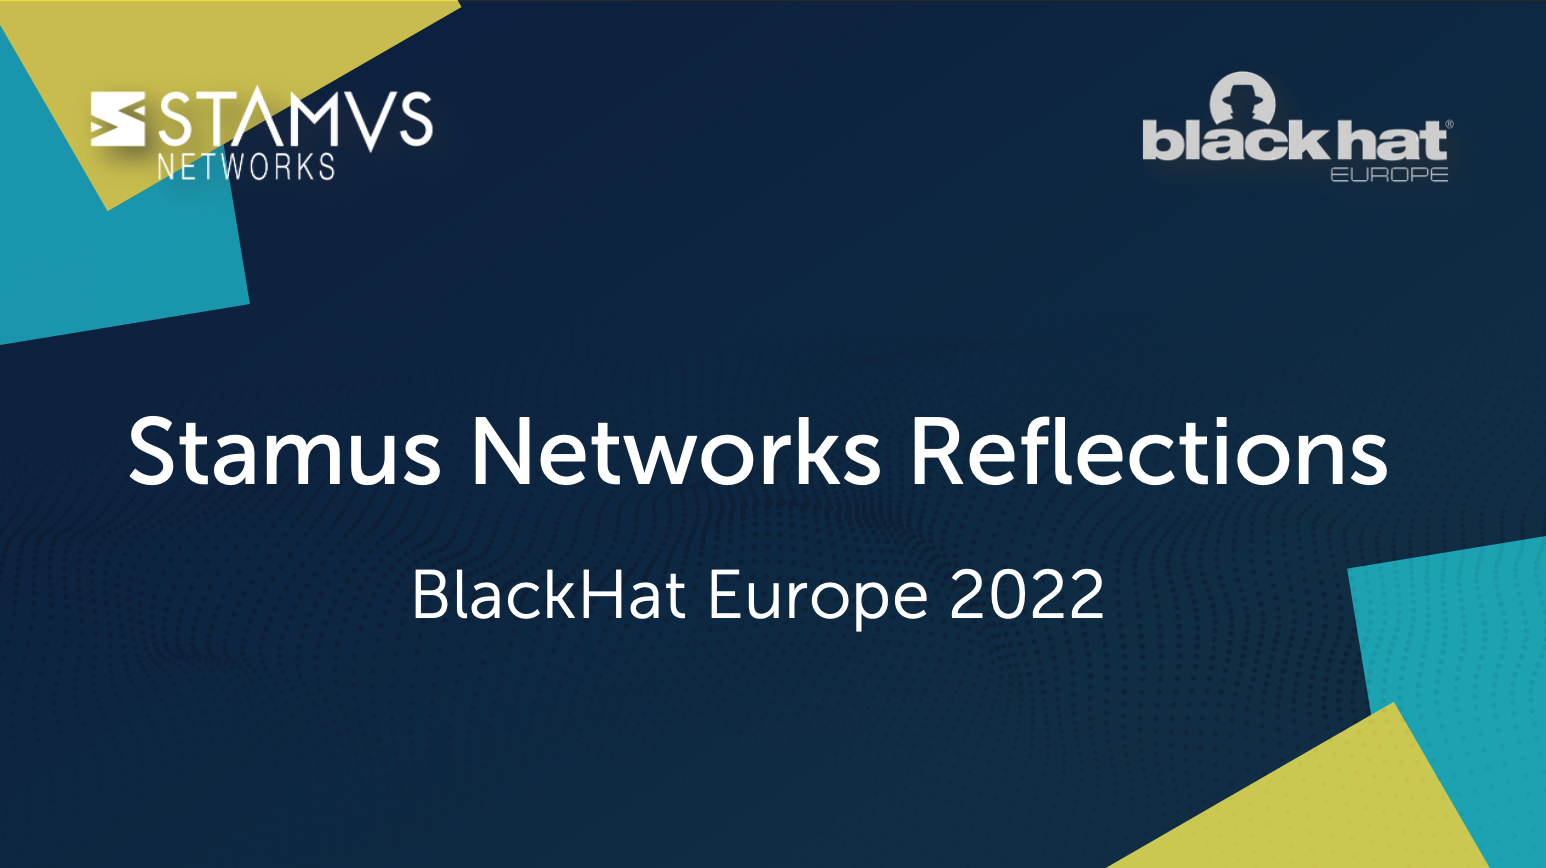 BlackHat-Europe-2022-Stamus